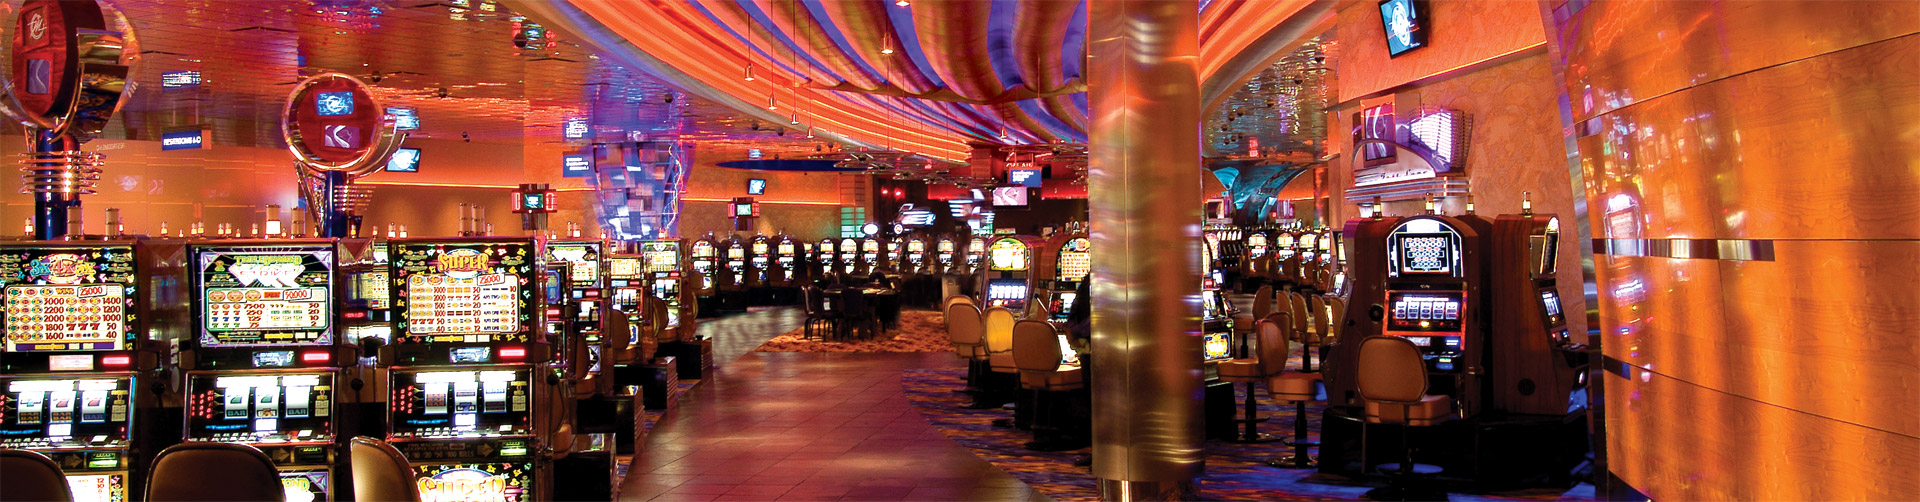 Christmas Casino Slots - 475054